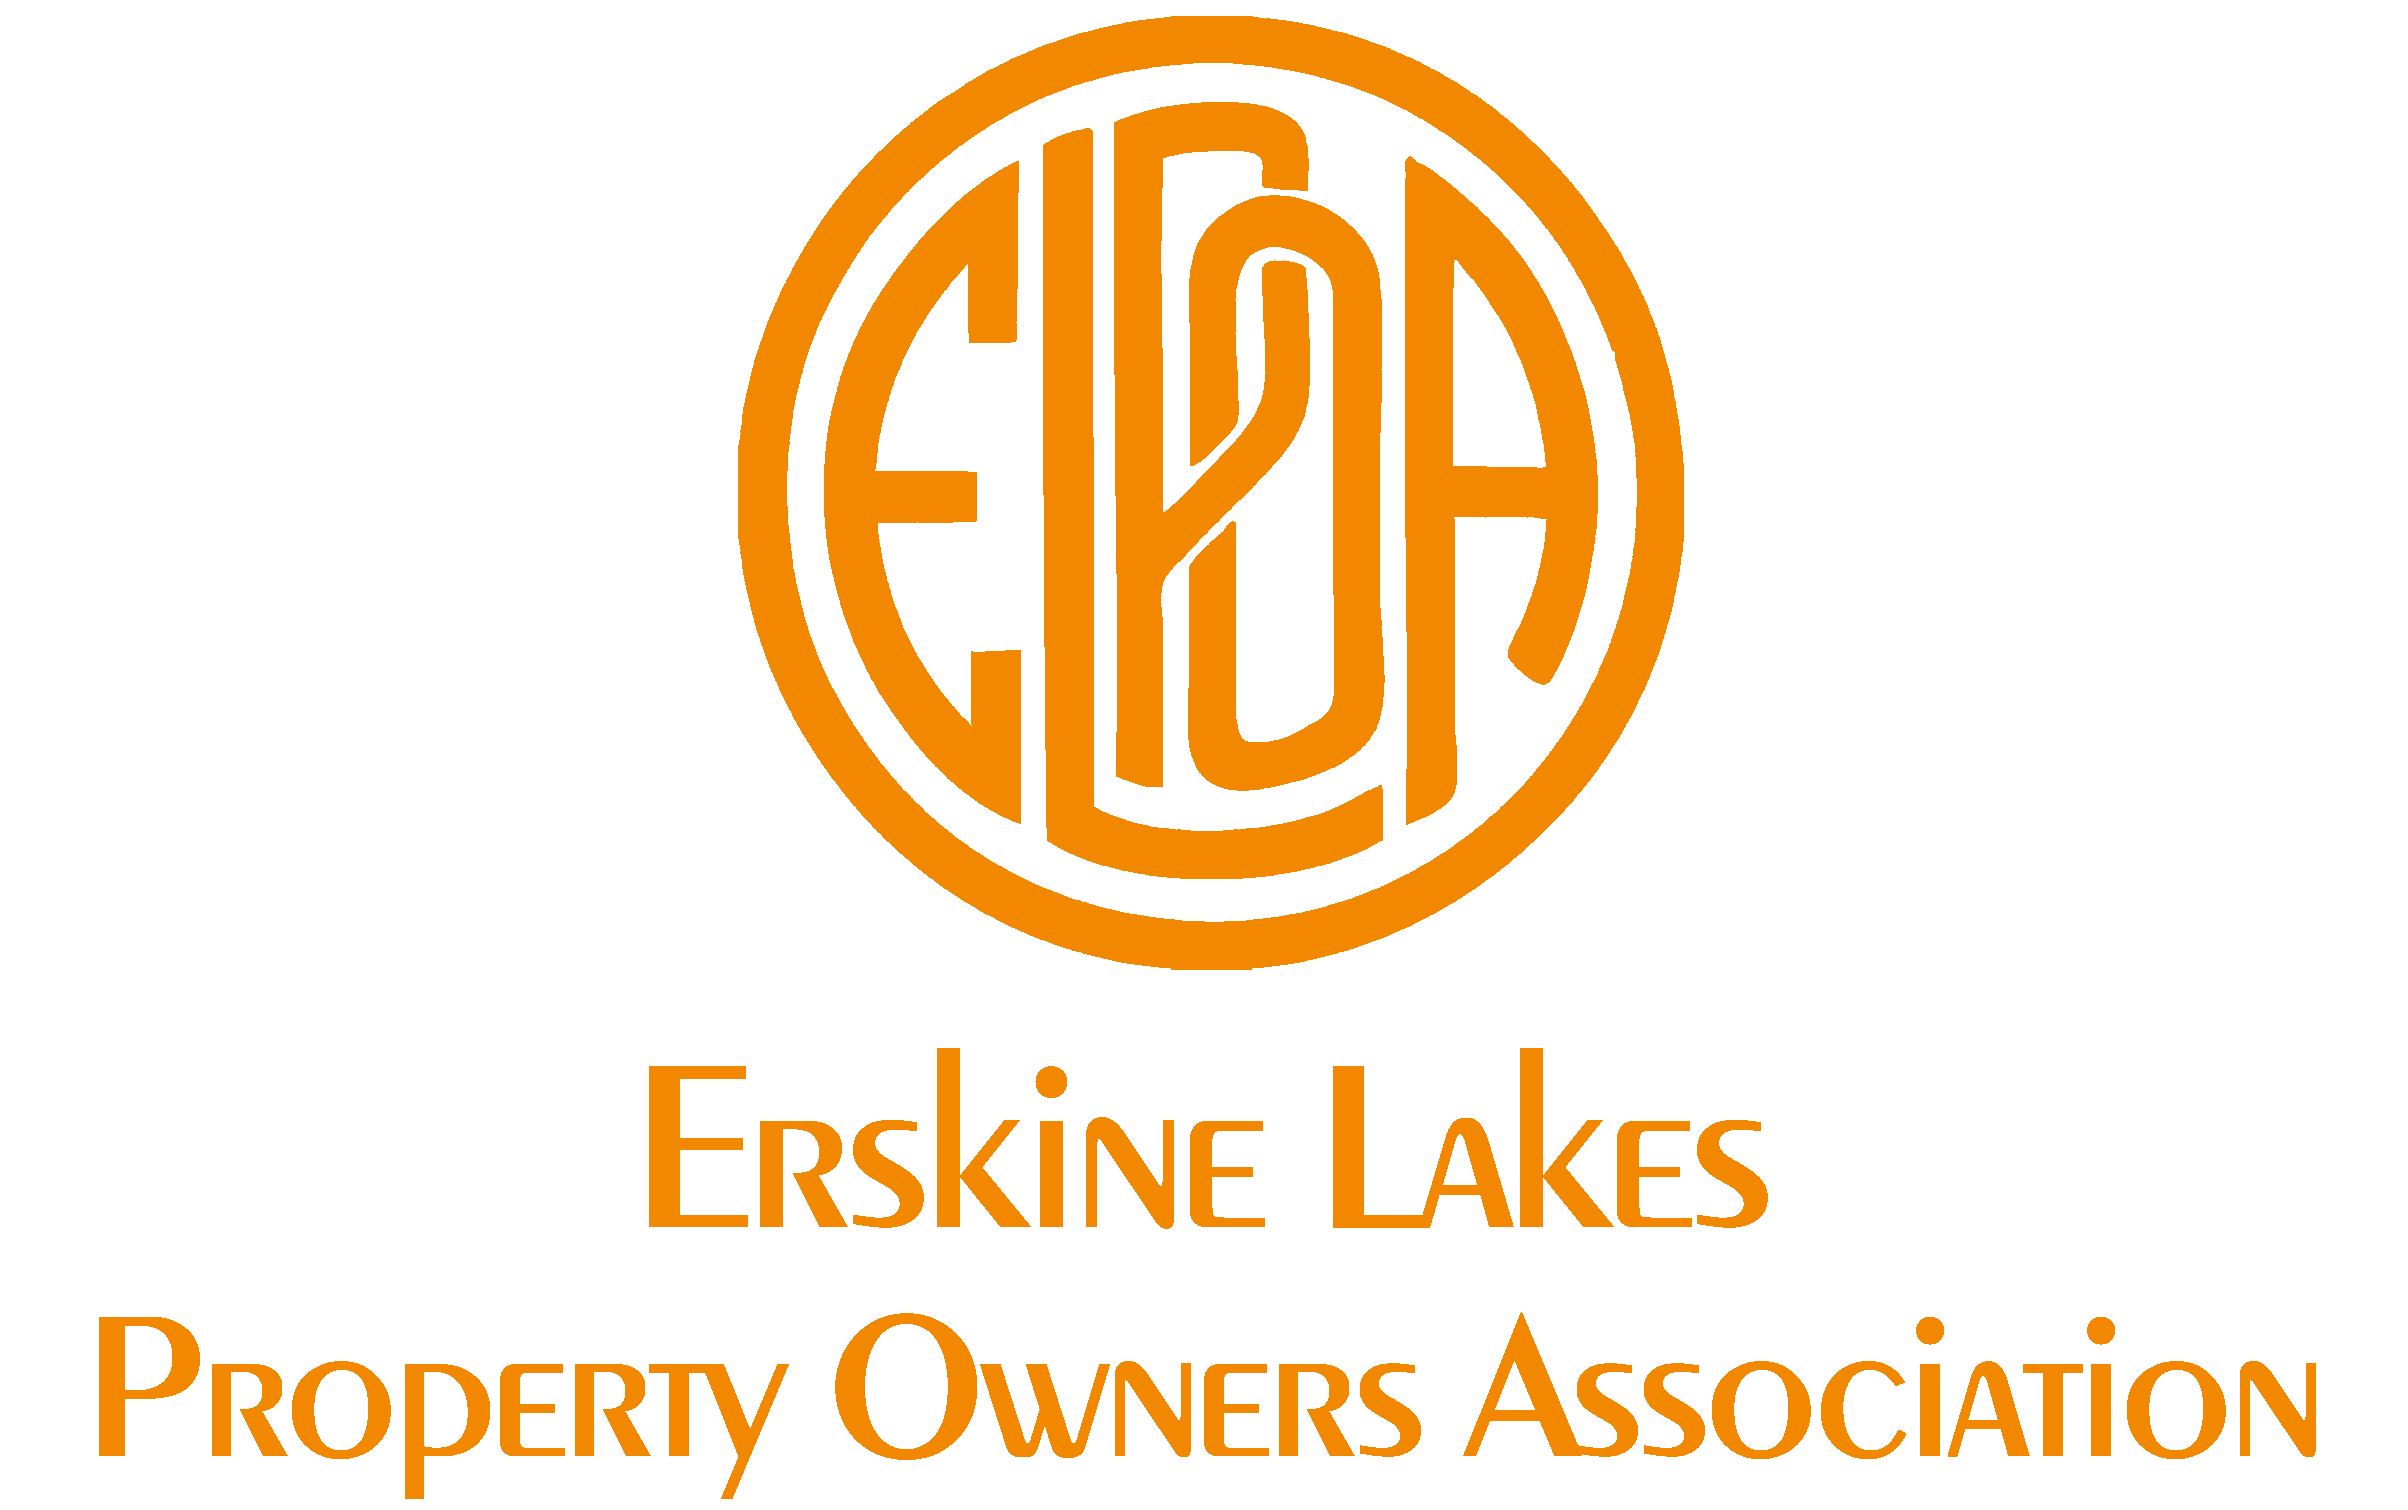 Erskine Lakes Property Owner's Association